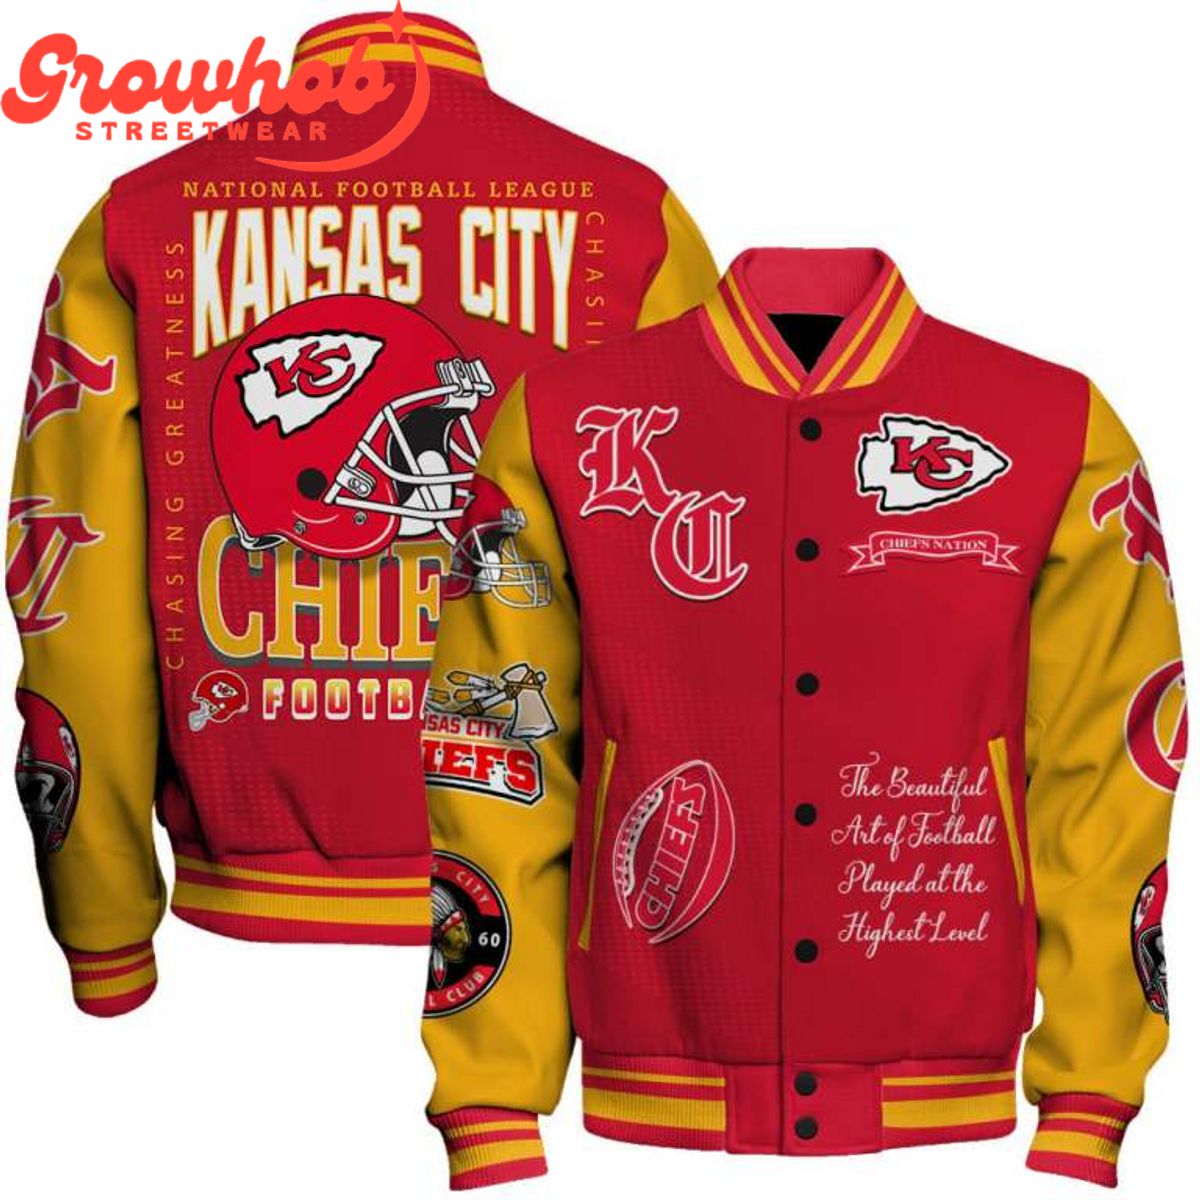 Kansas City Chiefs NFL Conference Champions Greatness Baseball Jacket